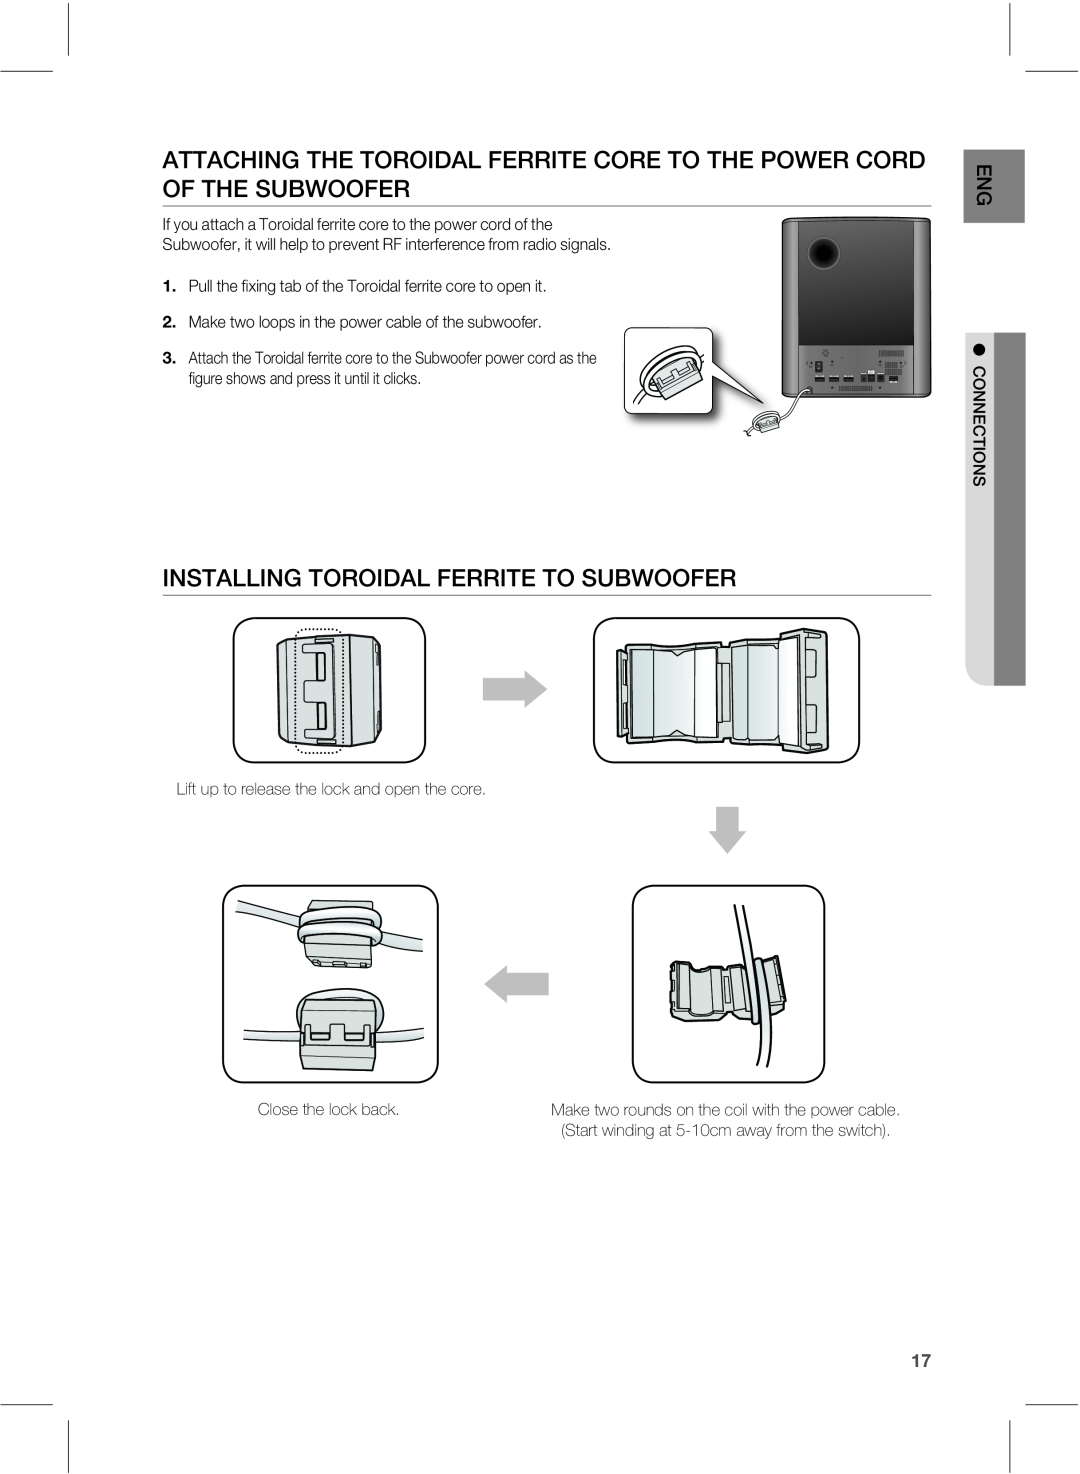 Samsung HWE550 manual 45--*/5030*%-&33*5&5046#800&3, JguVqUpSfmfbtfUifMpdlBoePqfoUifDpsf, M Connections 